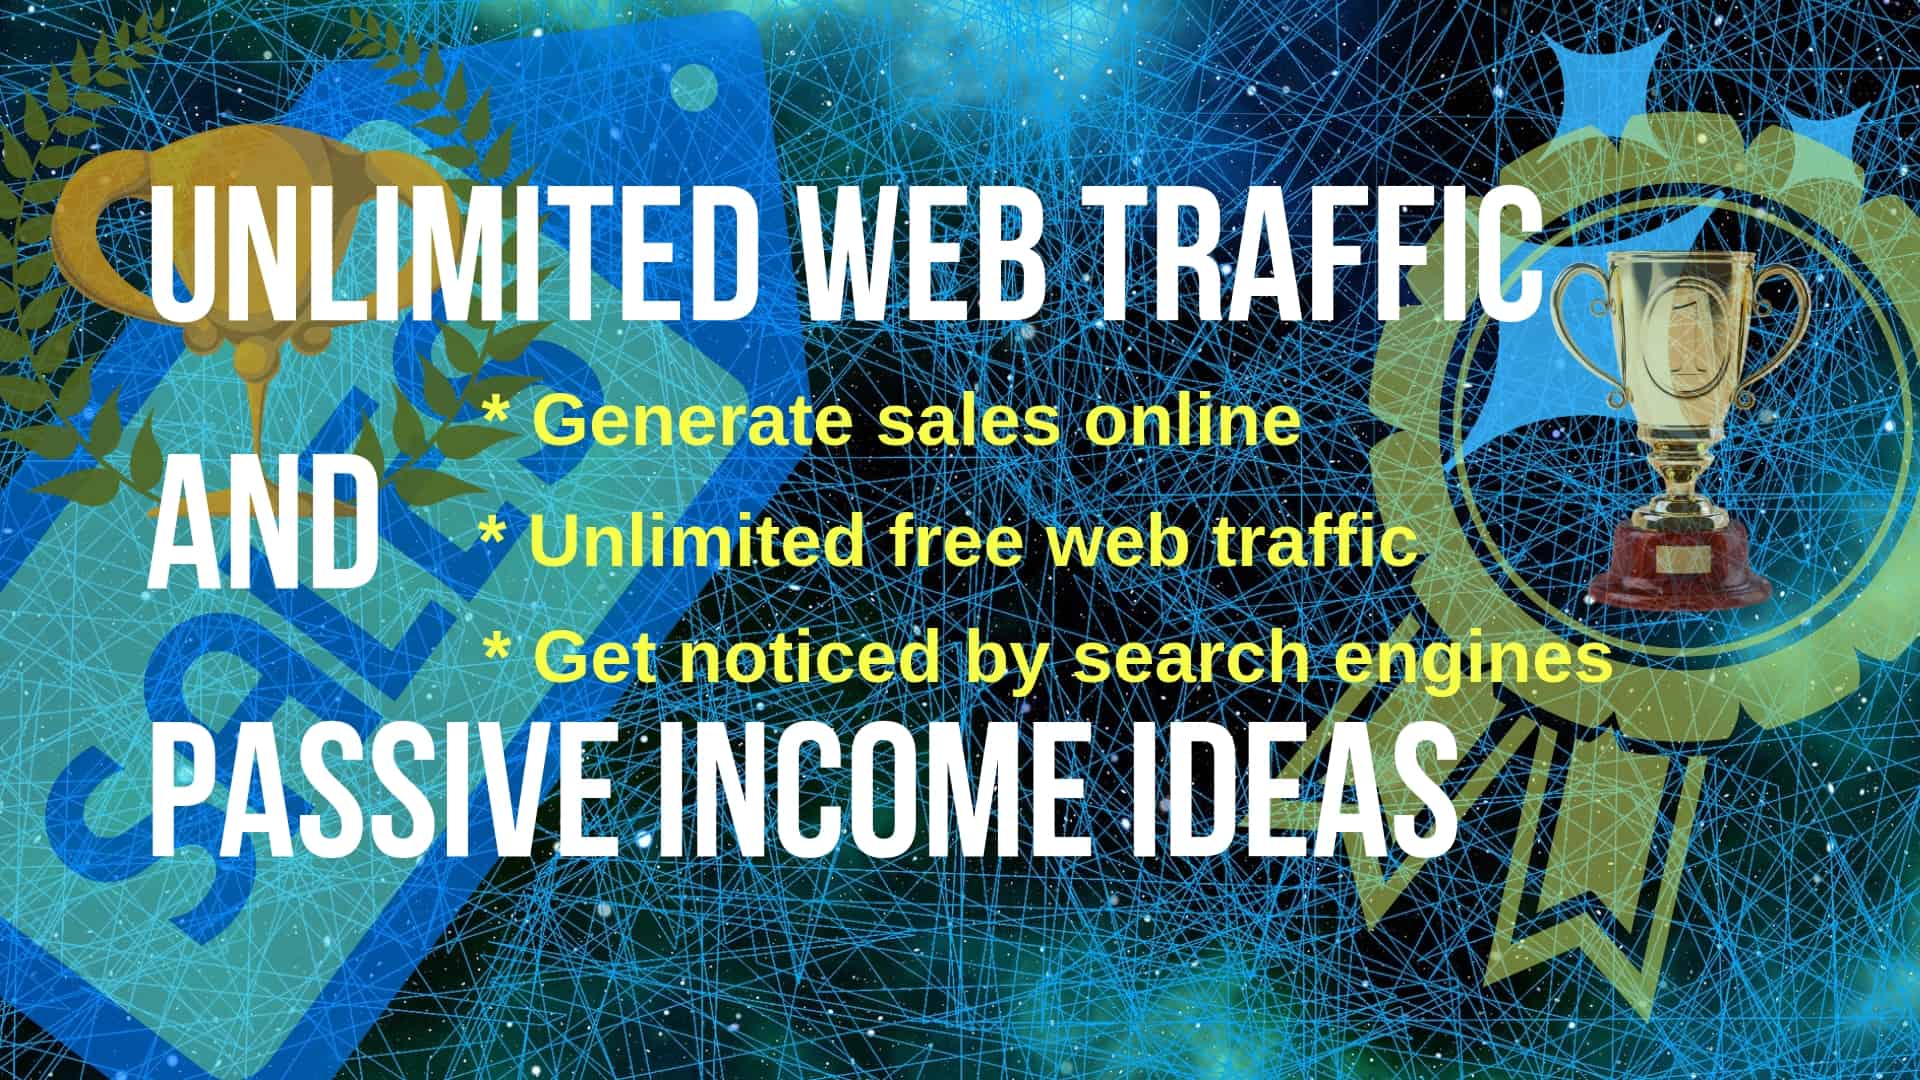 Unlimited web traffic and passive income ideas